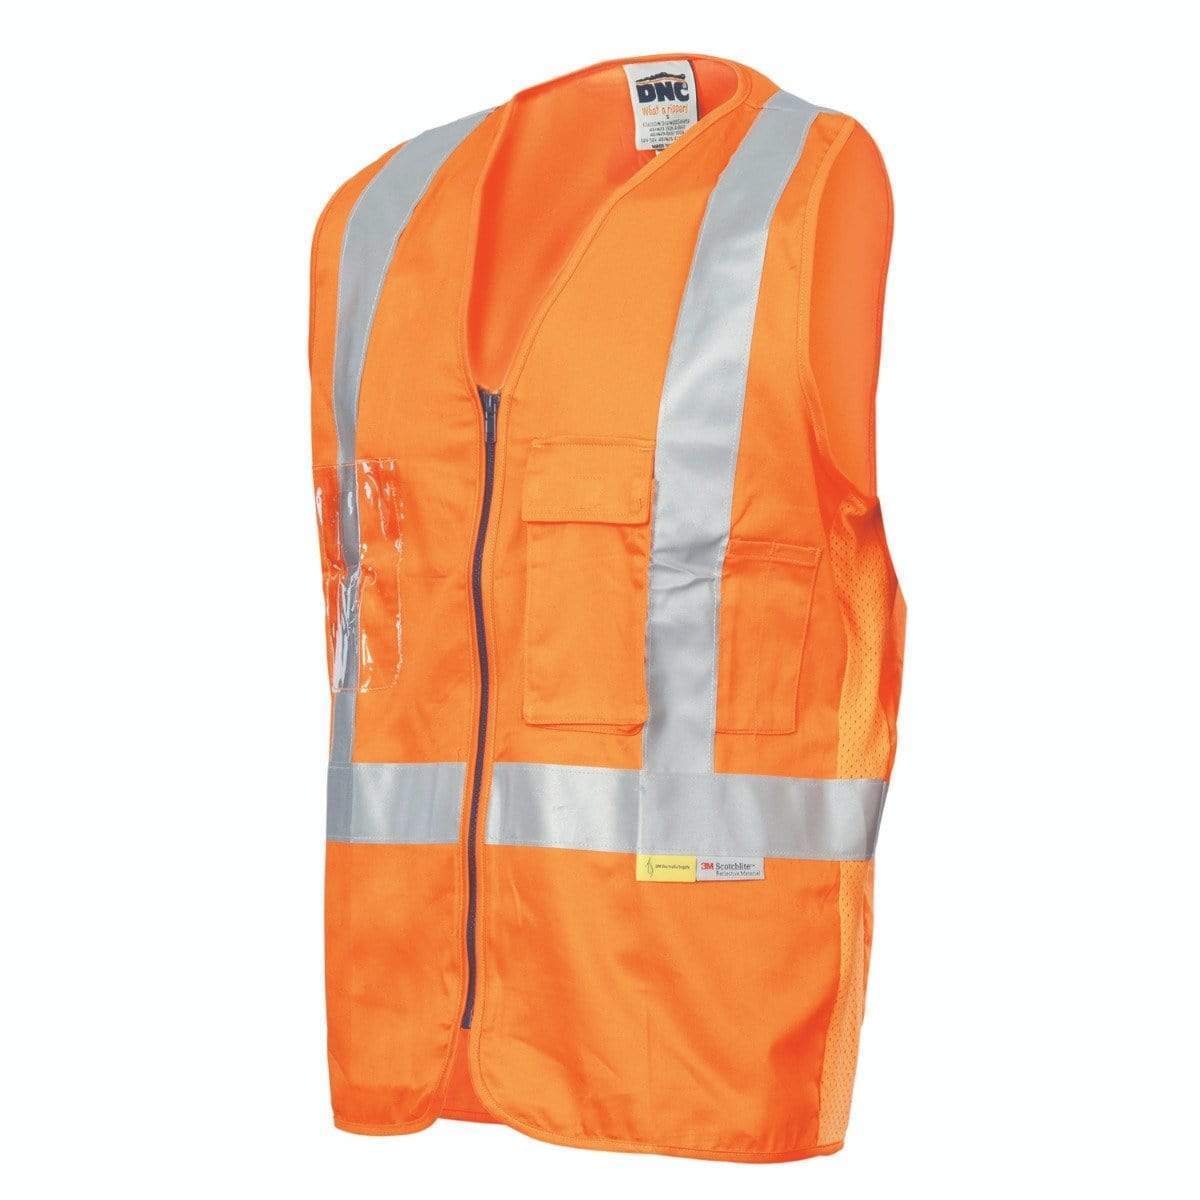 Dnc Workwear Day/night Cross Back Cotton Safety Vest - 3810 Work Wear DNC Workwear Orange S 